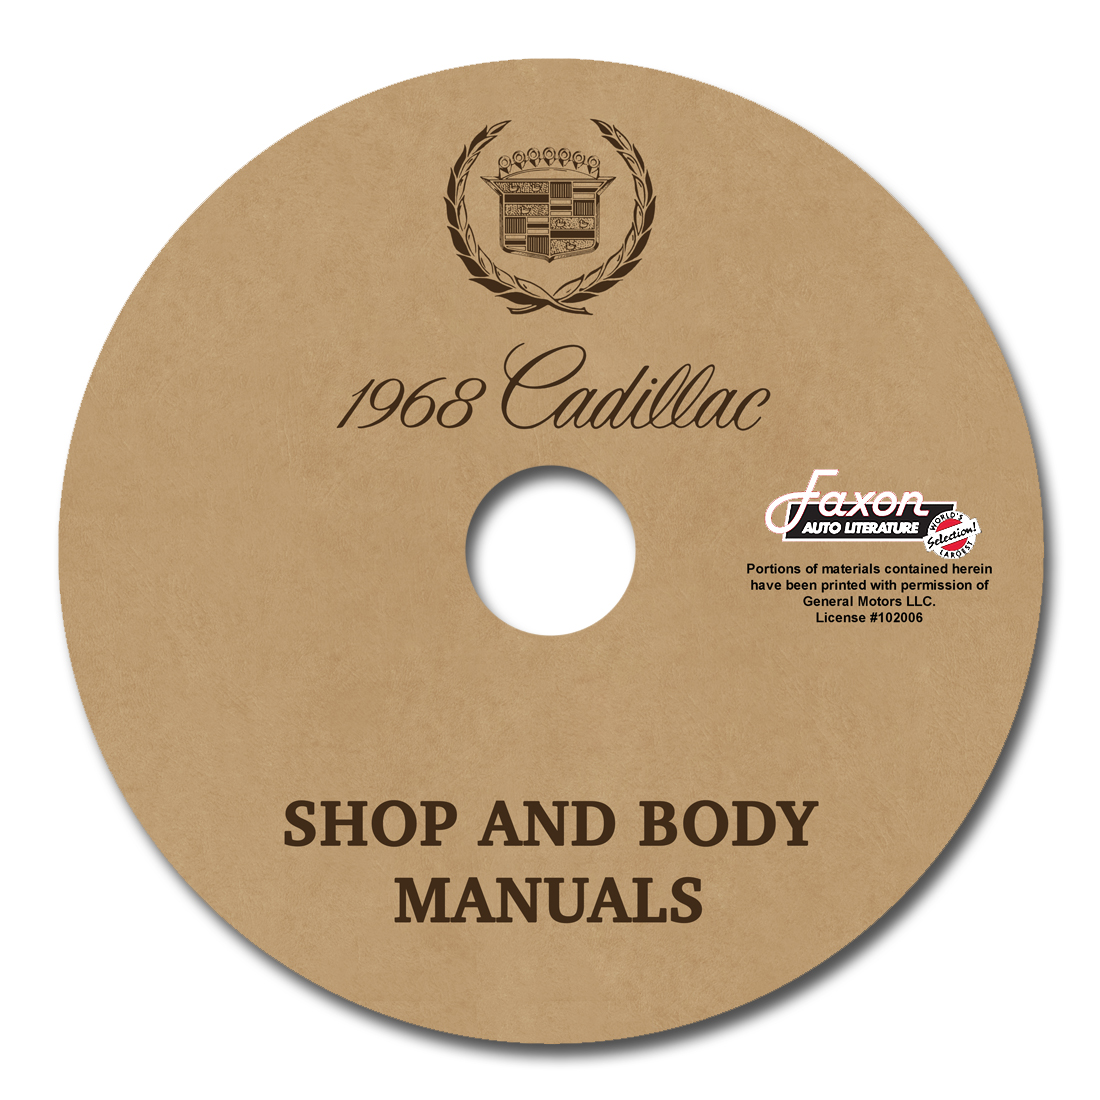 1967 Cadillac Shop Manual & Body Manual on CD-ROM 